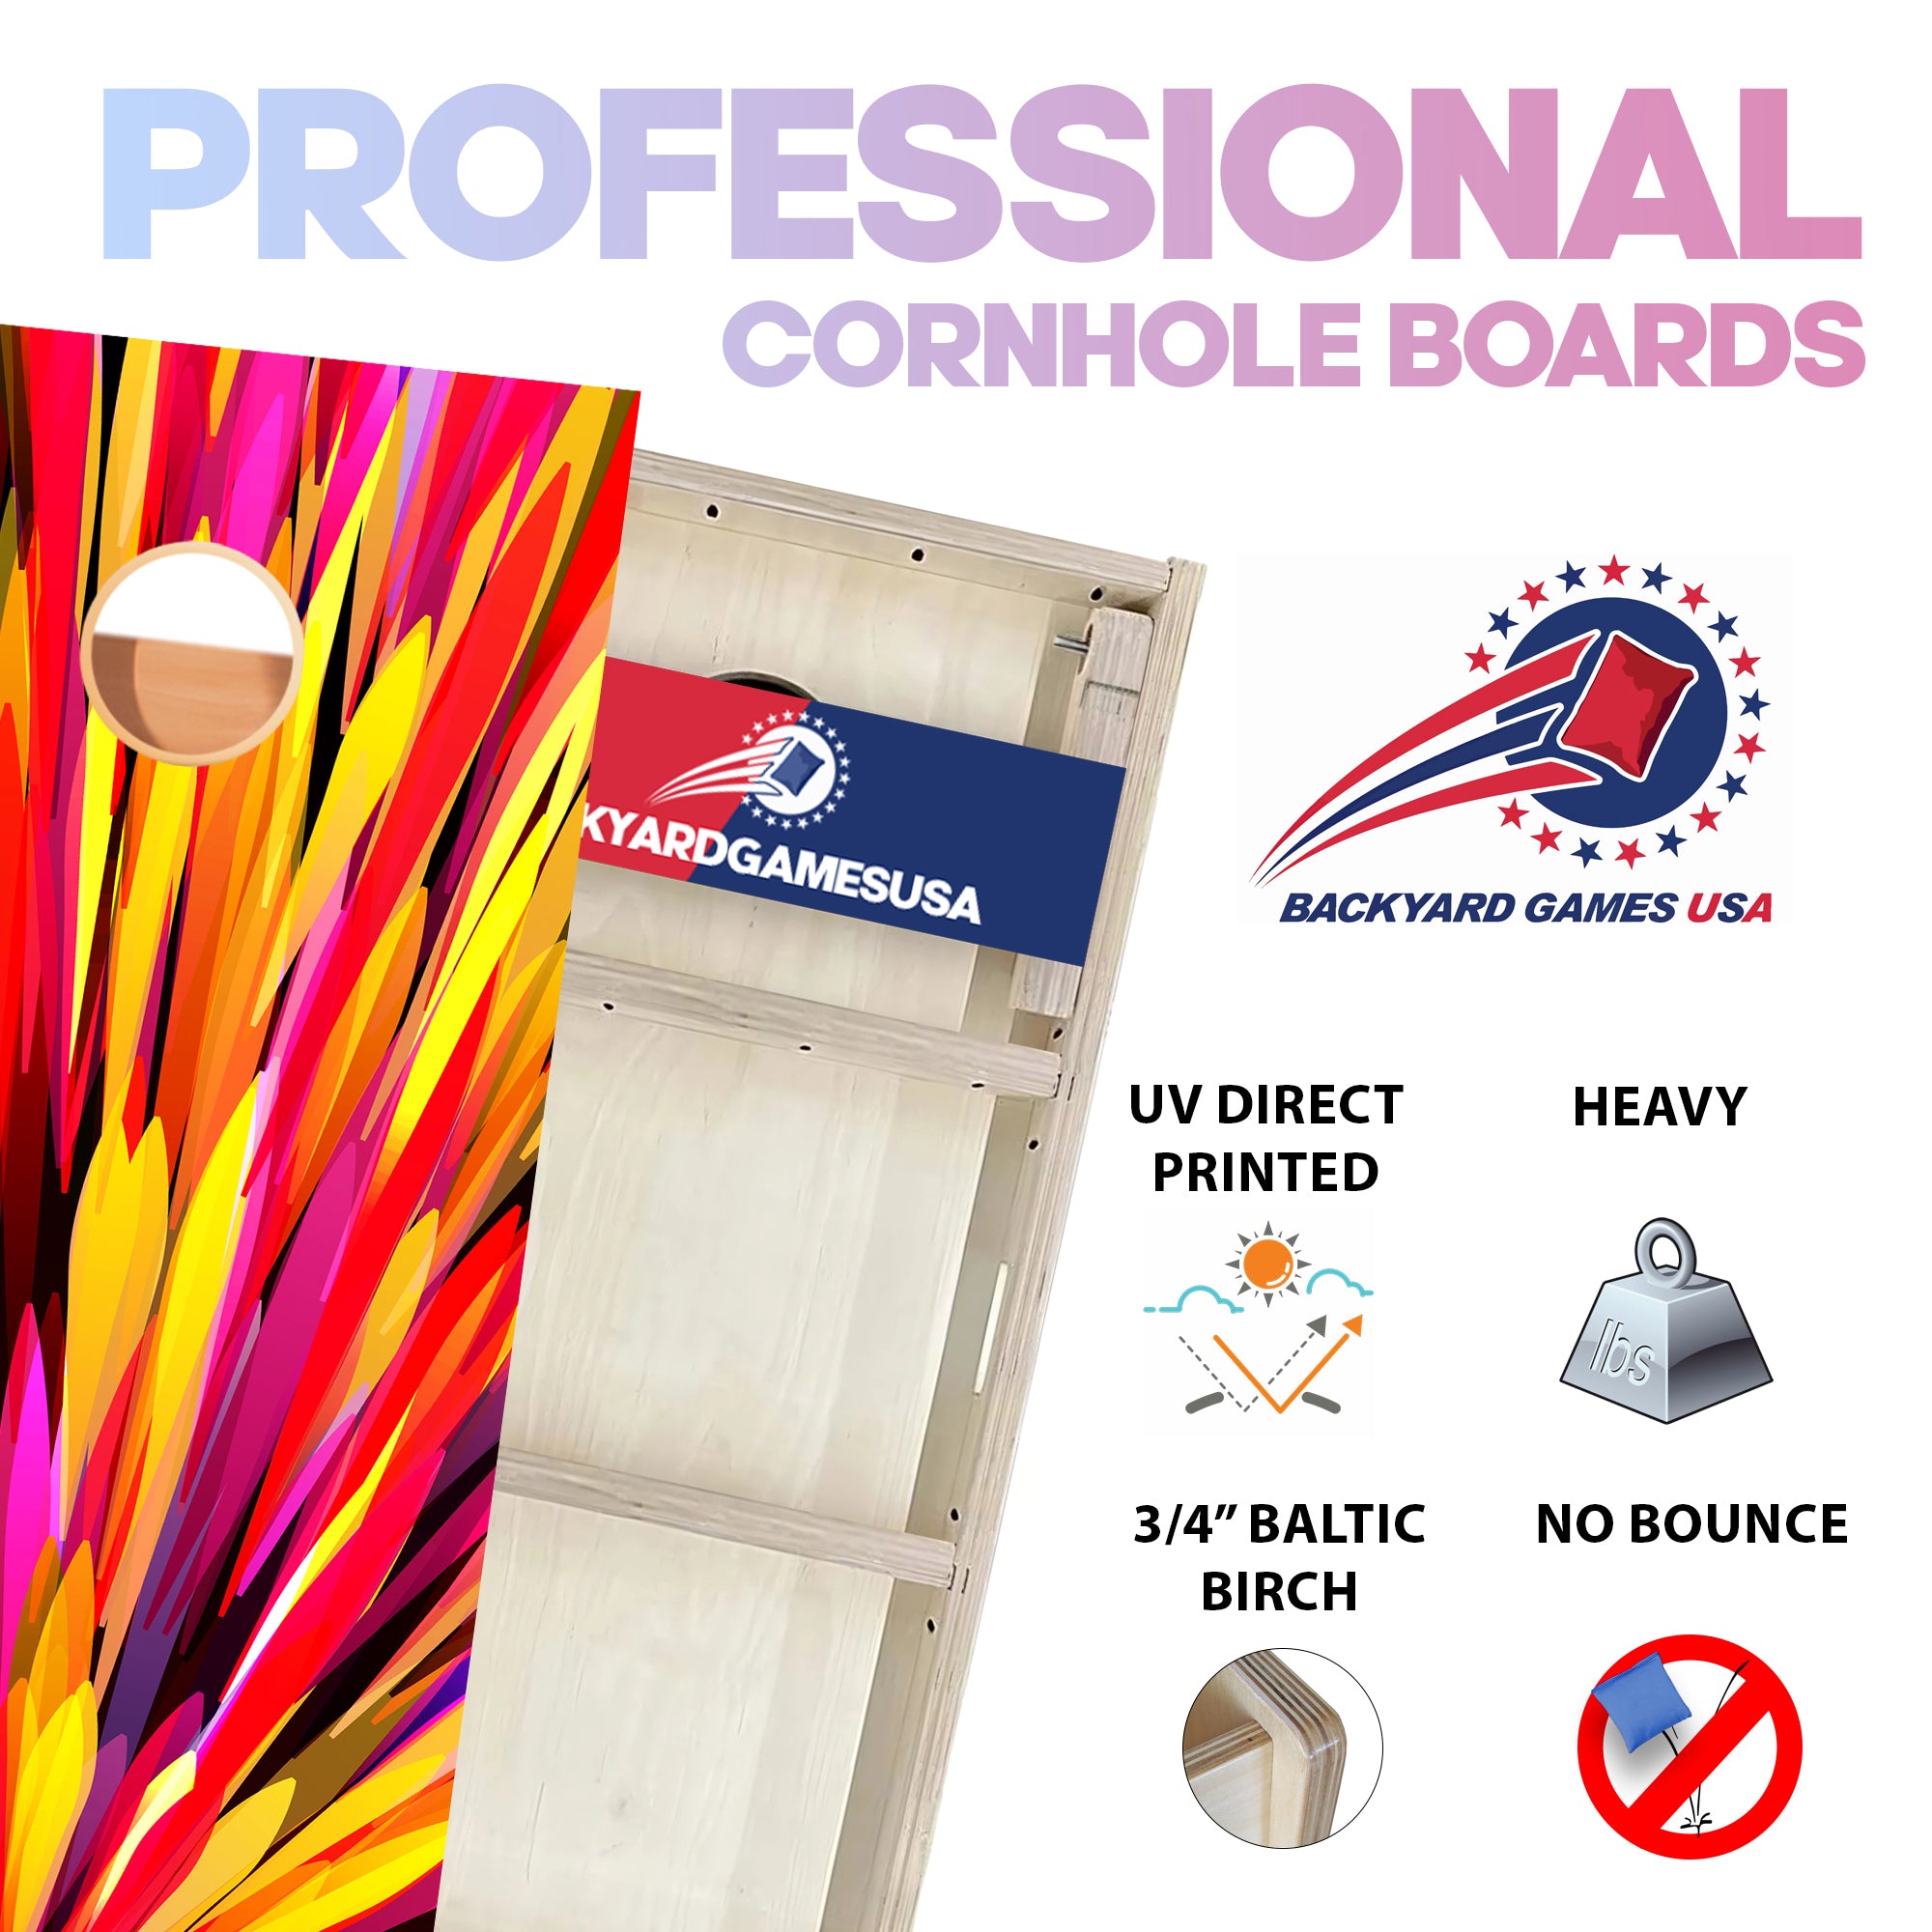 Colorful Art Professional Cornhole Boards